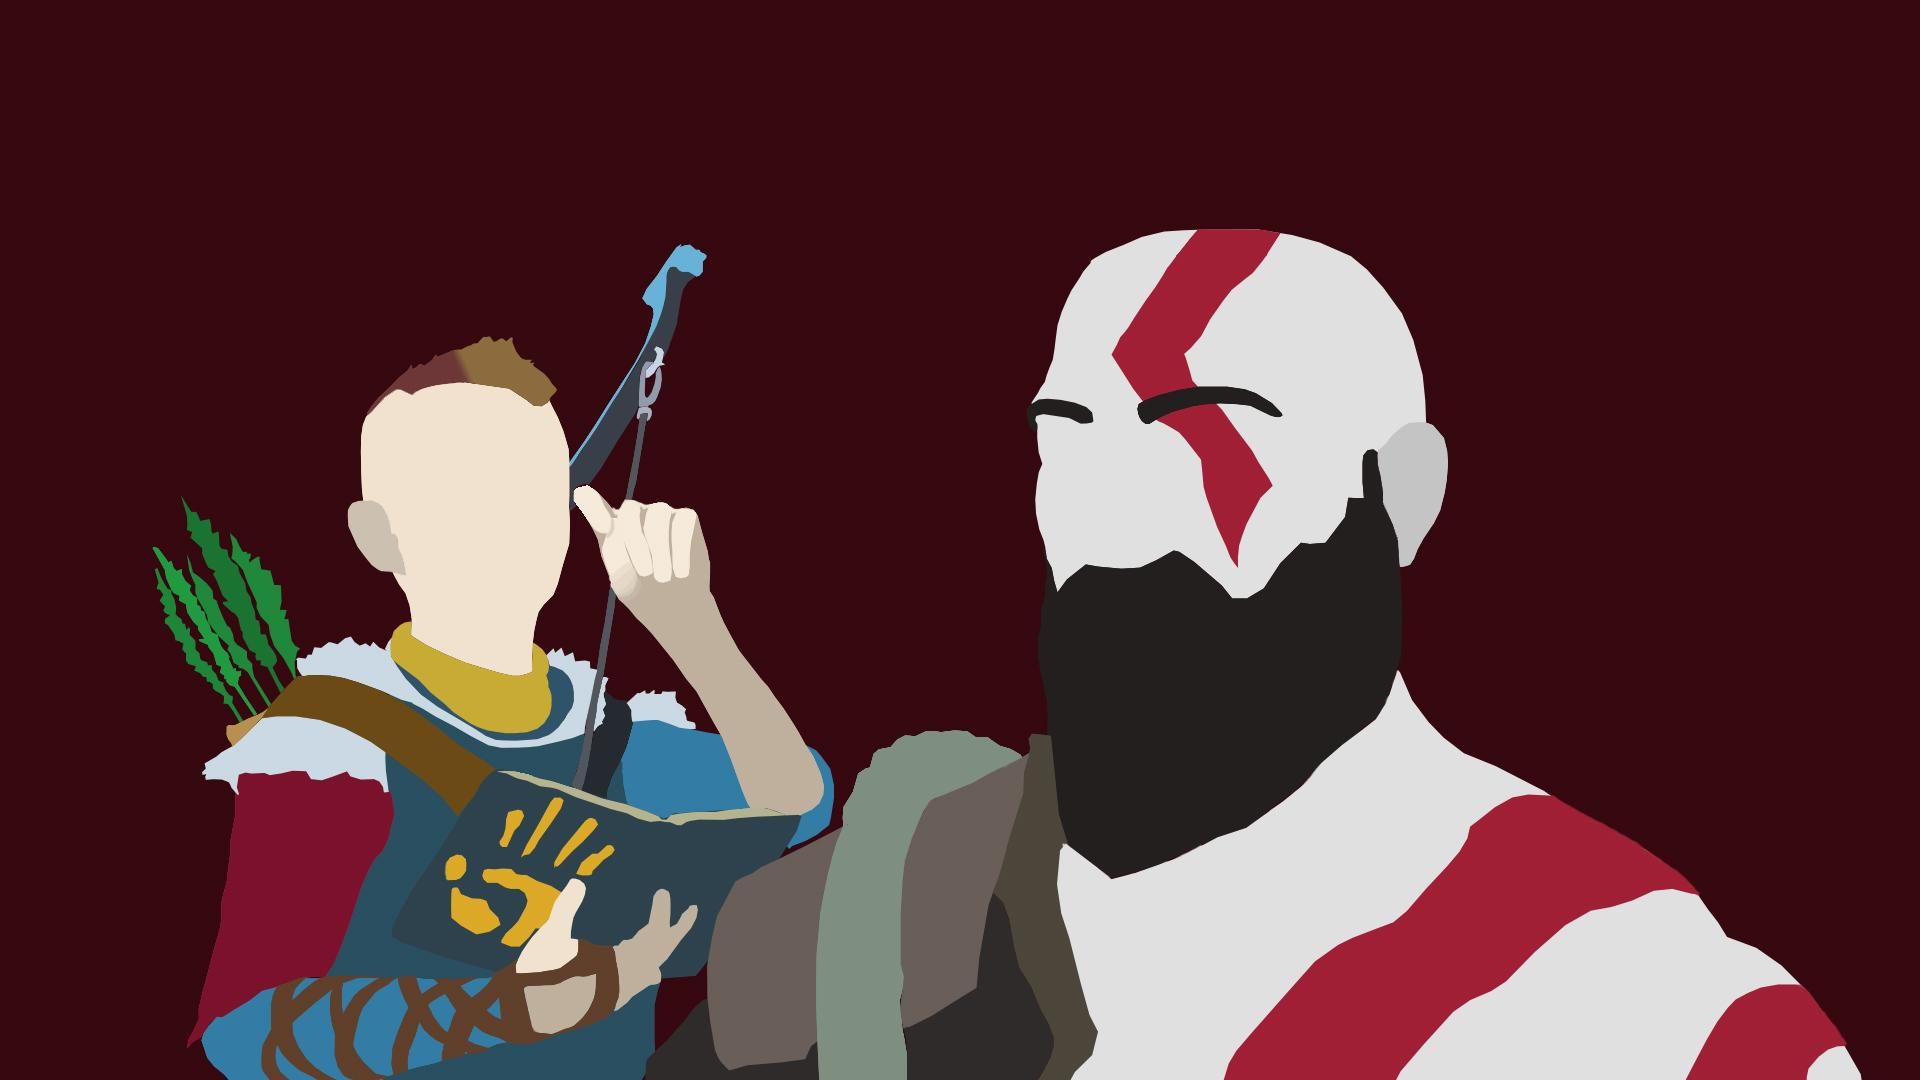 I Made A Minimalist Wallpaper Of Kratos And Atreus From God Of War (2018) (1920x1080) [x Post R Godofwar]